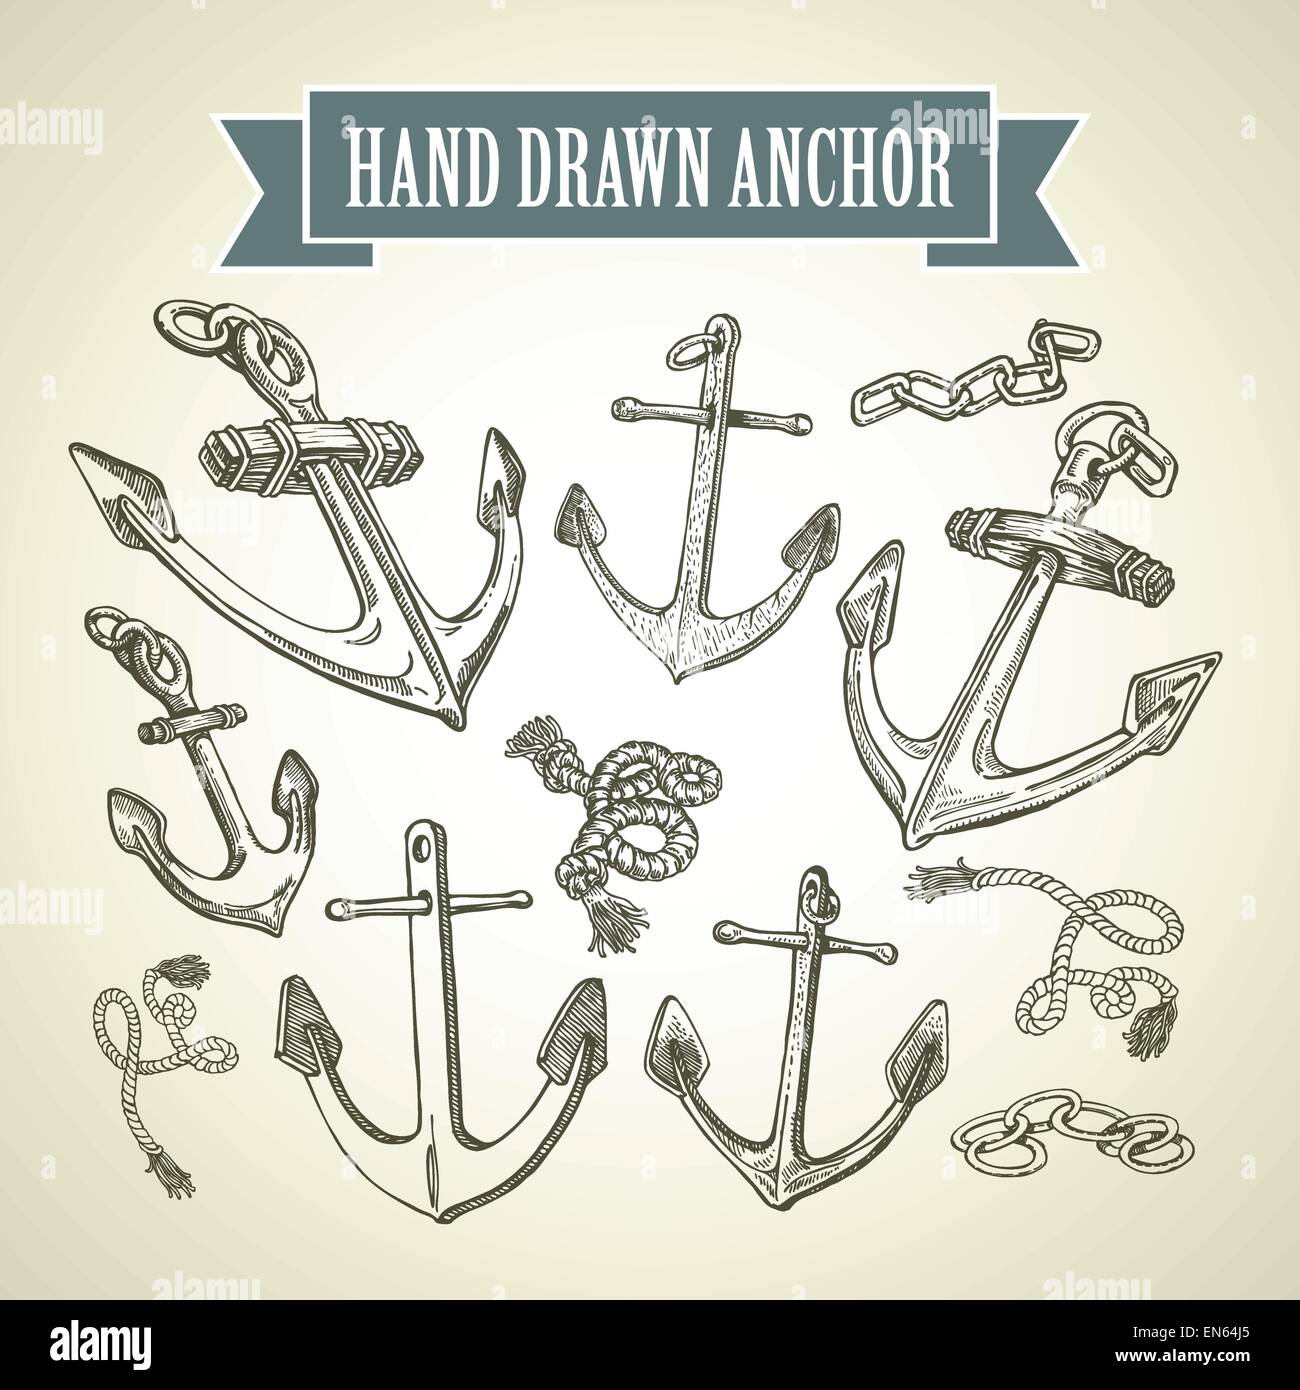 Sketch Hand drawn anchor. Set of vector illustrations Stock Vector